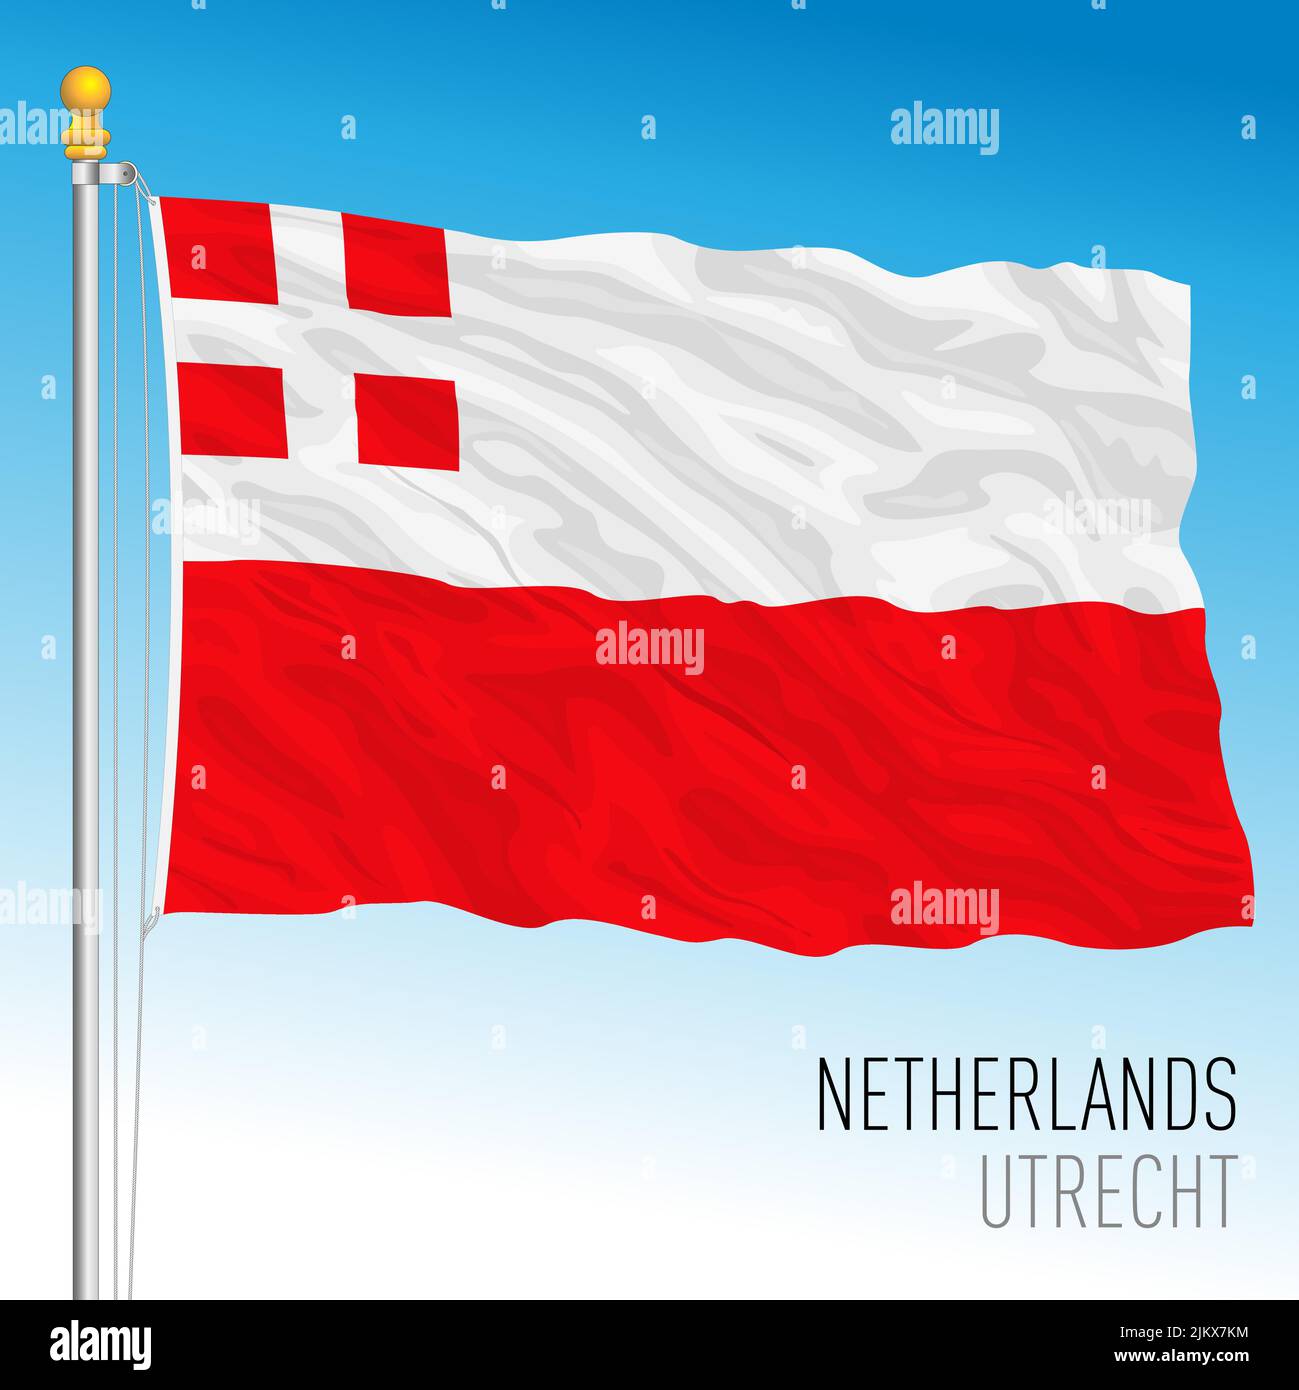 Utrecht provincial flag, Netherlands, European Union, vector illustration Stock Vector